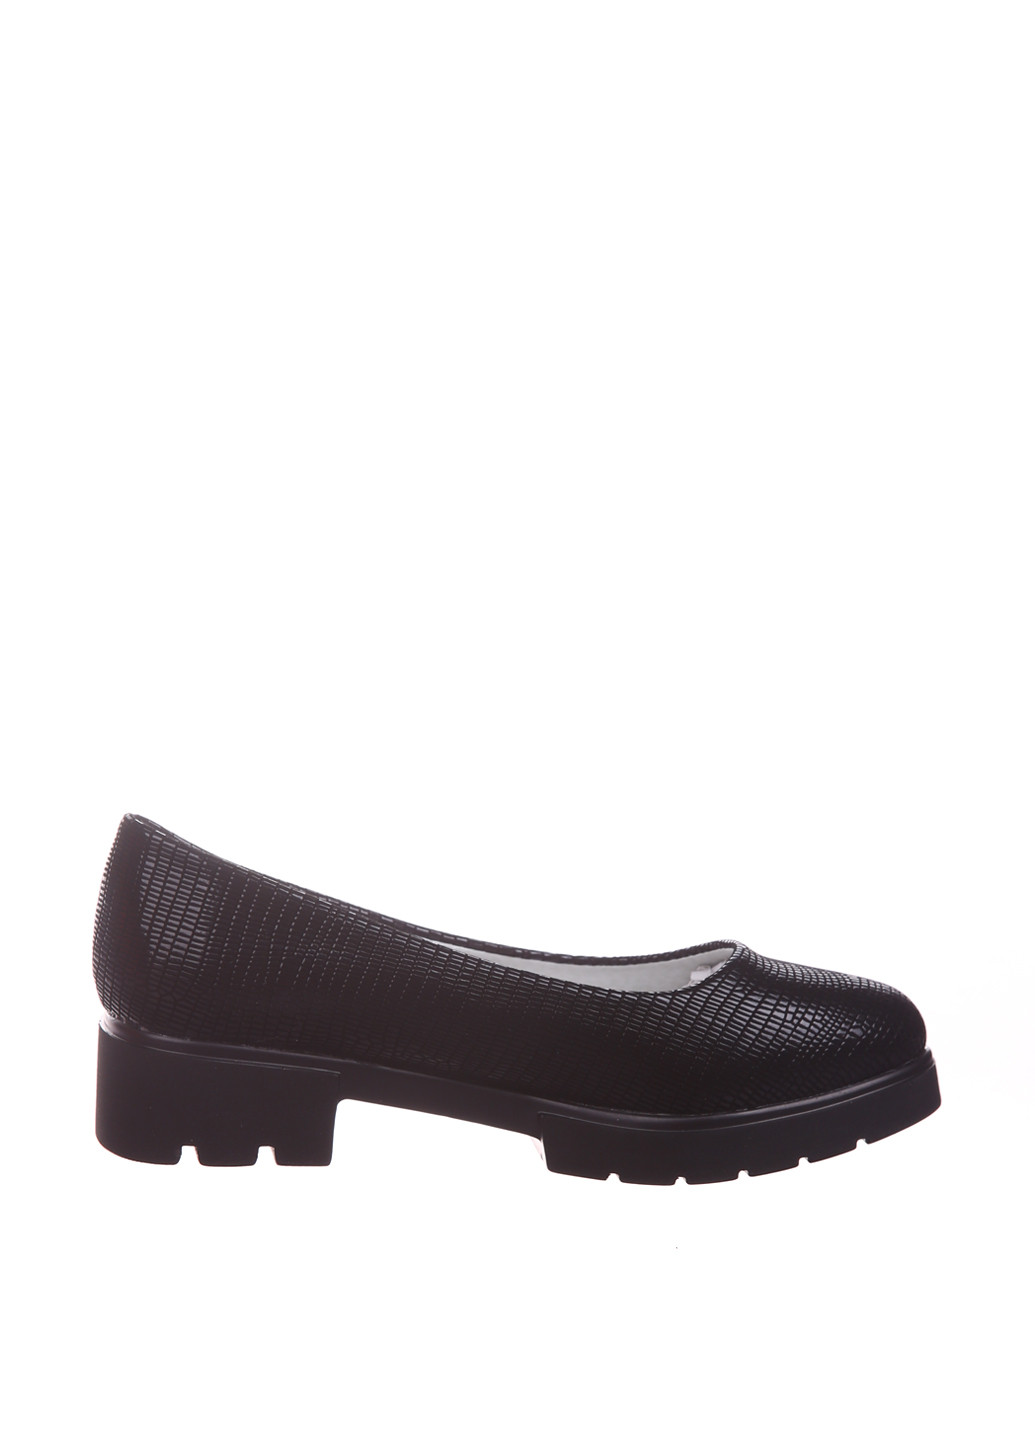 Черные туфли на низком каблуке Kimbo-O